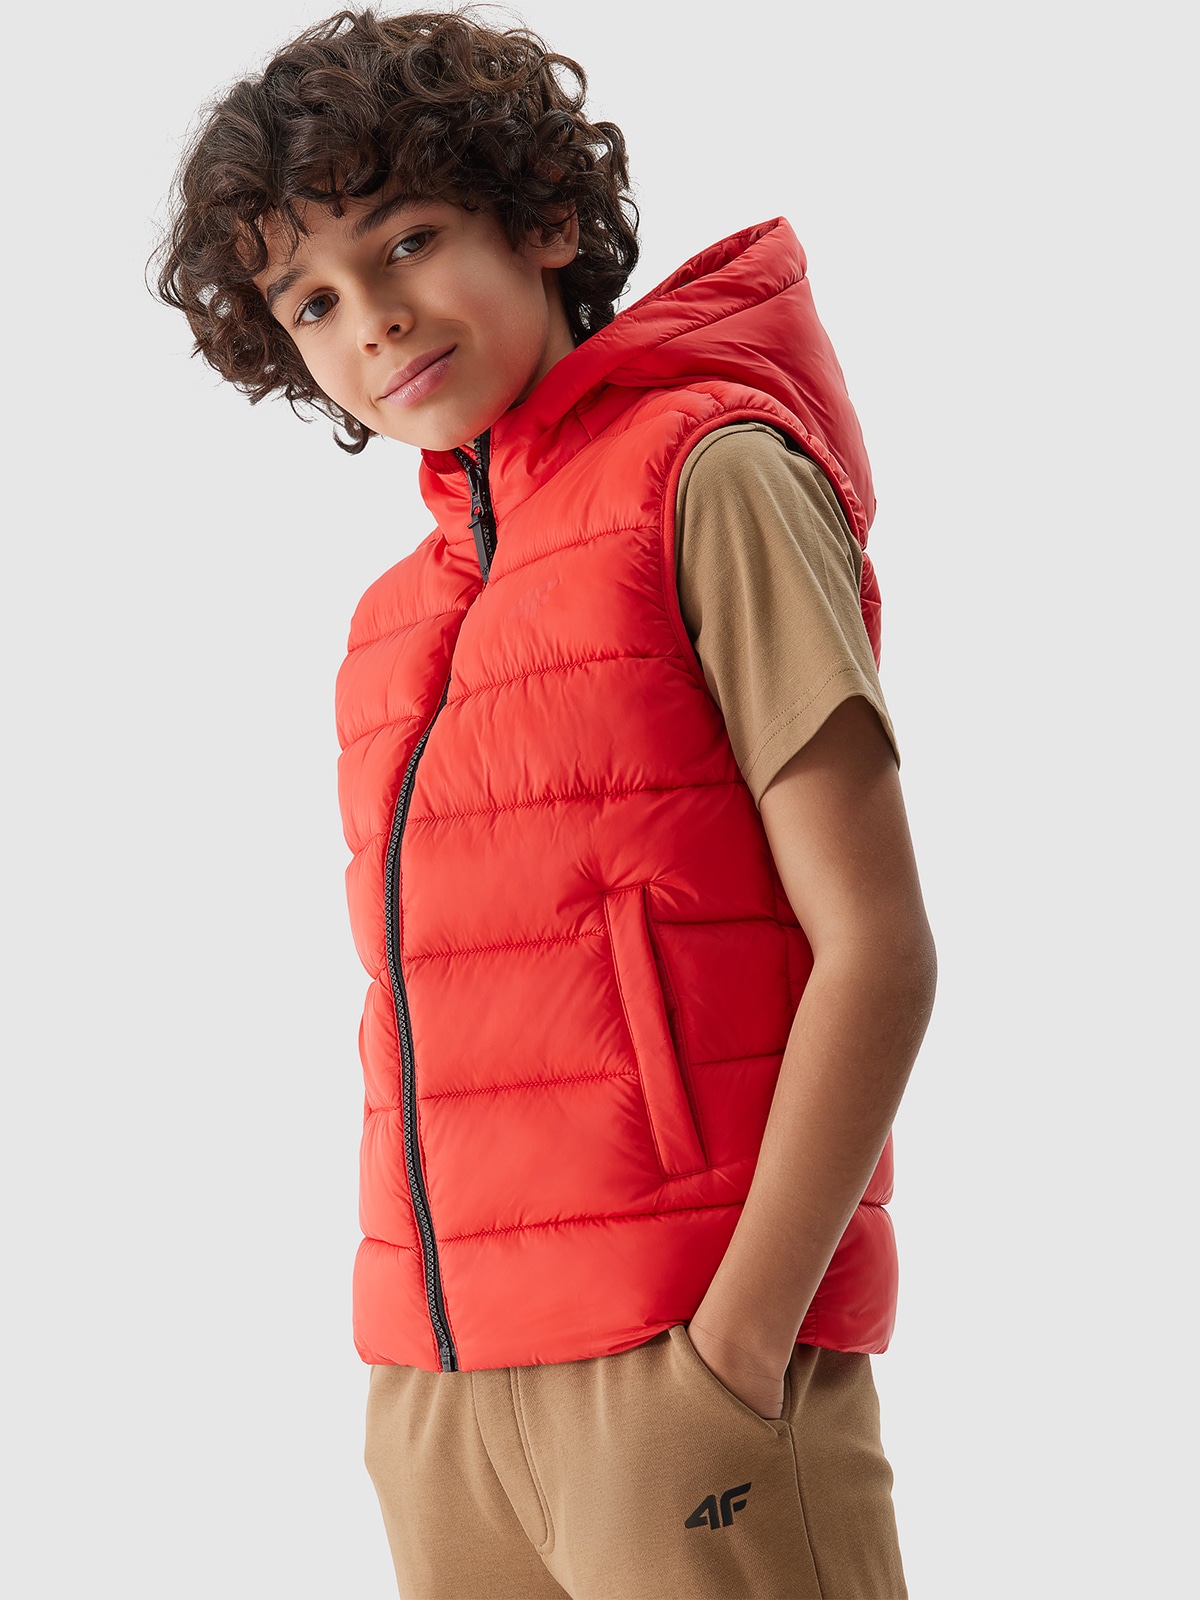 Chlapčenská zatepľovacia vesta so syntetickou výplňou - červená